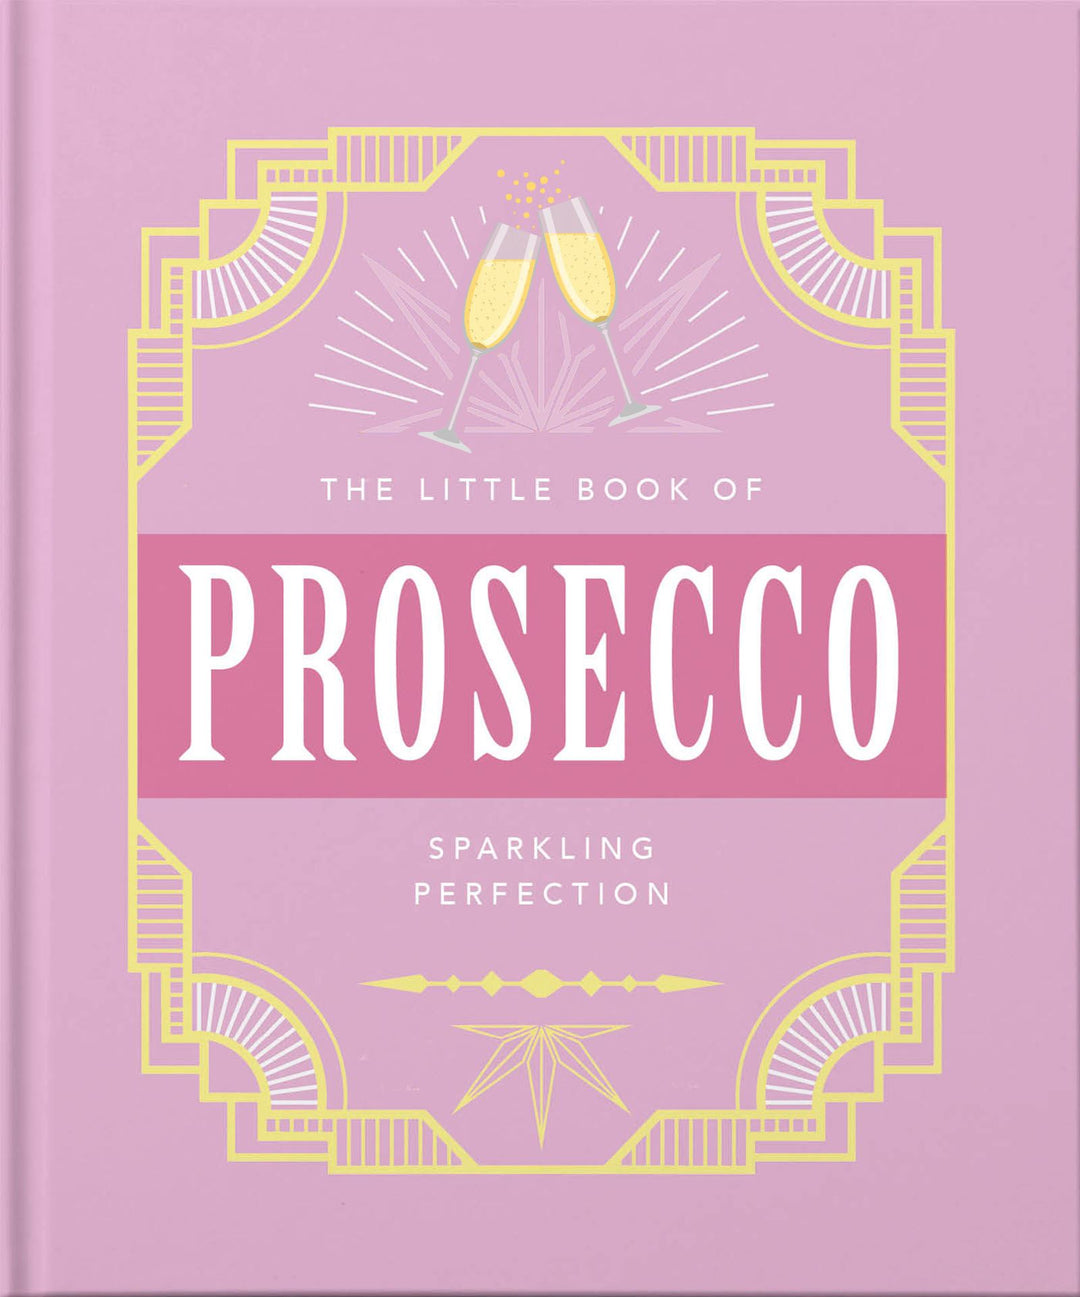 THE LITTLE BOOK OF PROSECCO BOOK